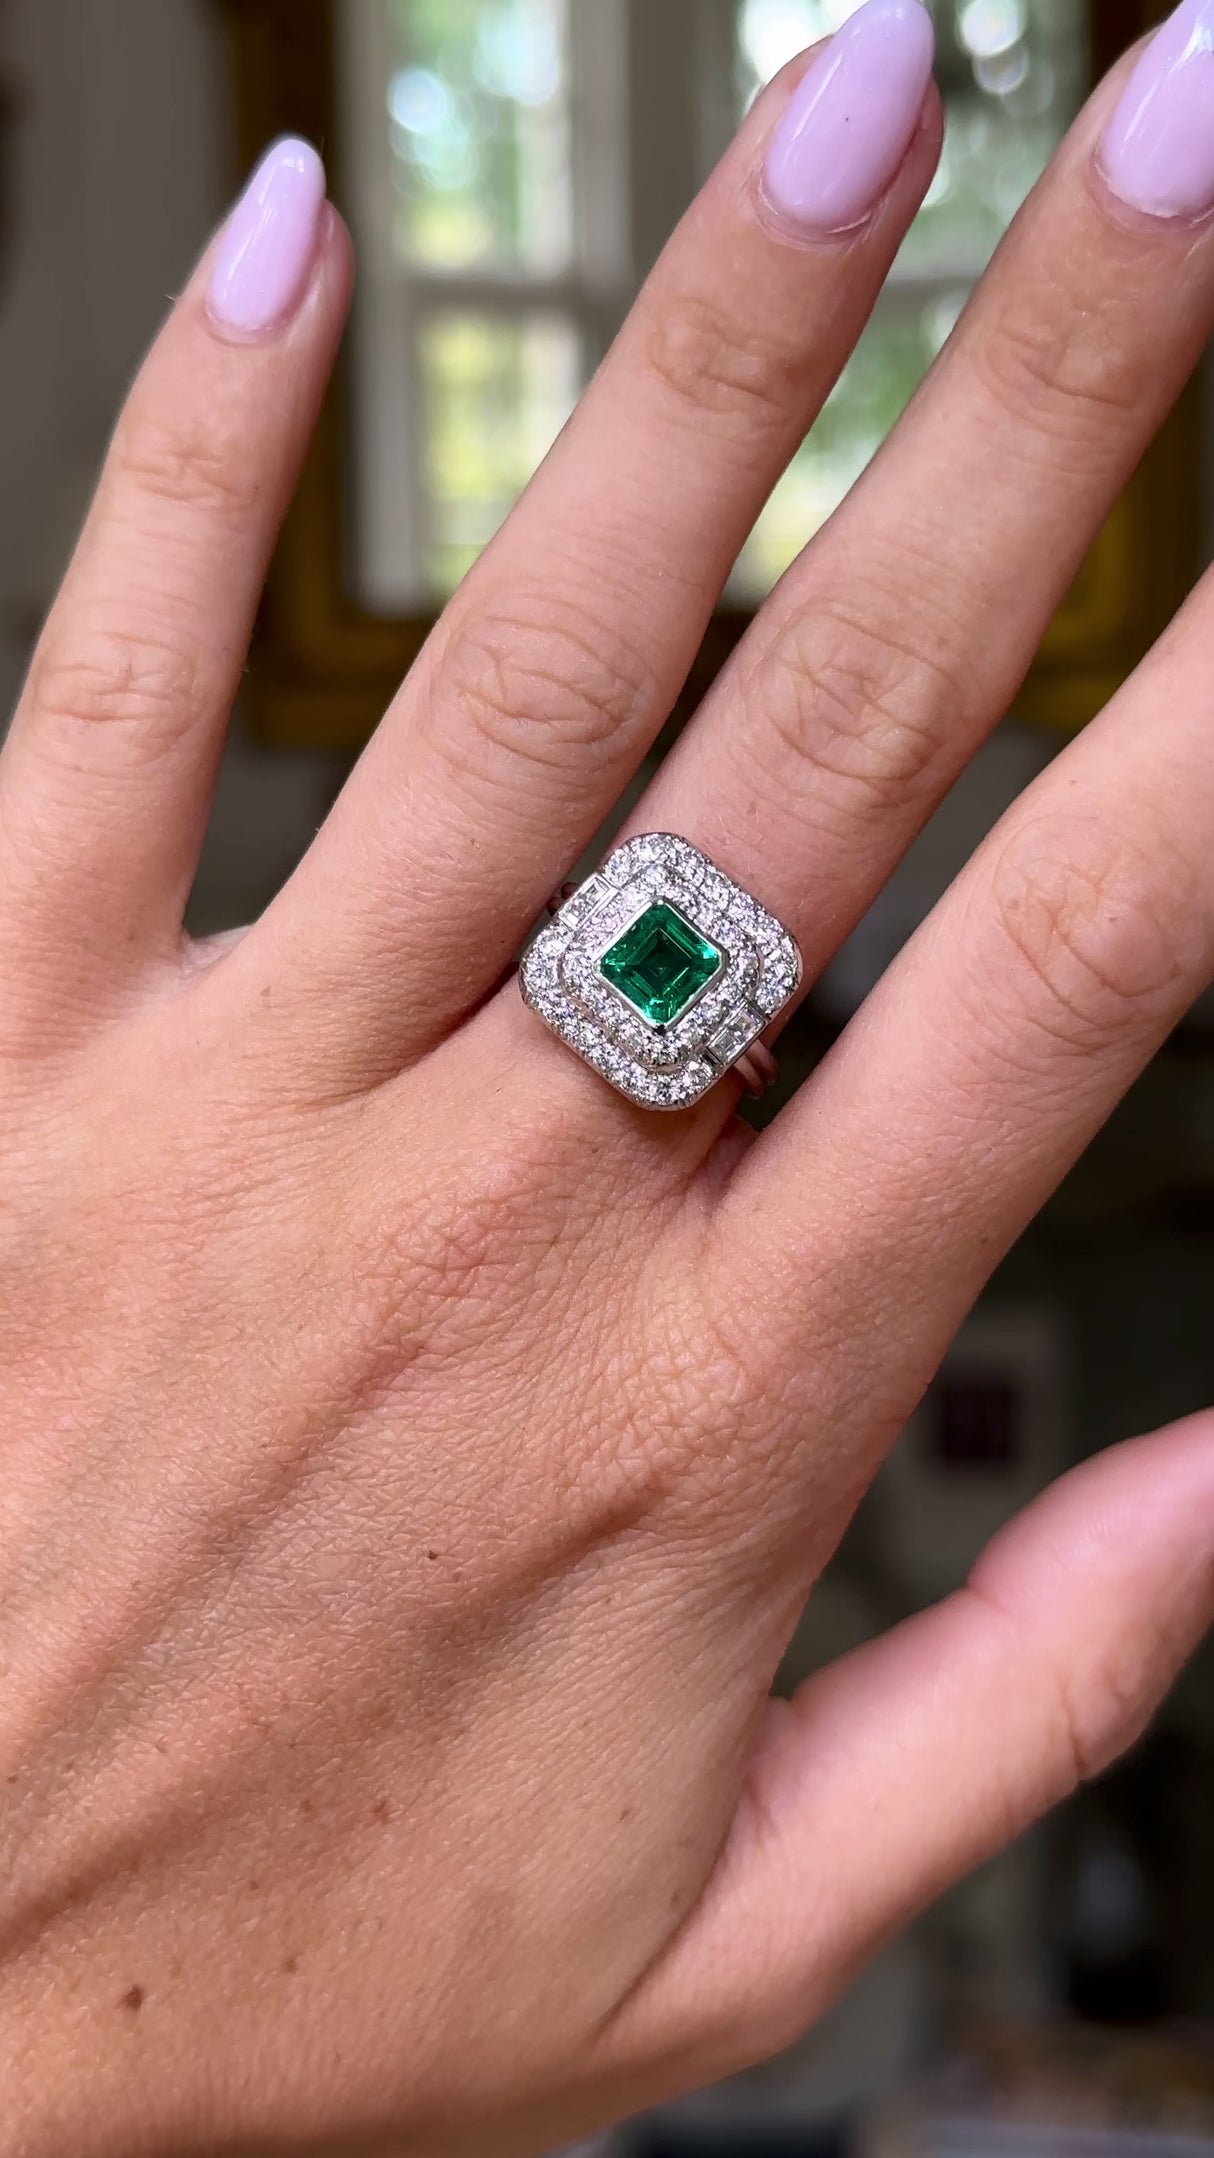 Art Deco, square-cut Colombian emerald & diamond cluster ring